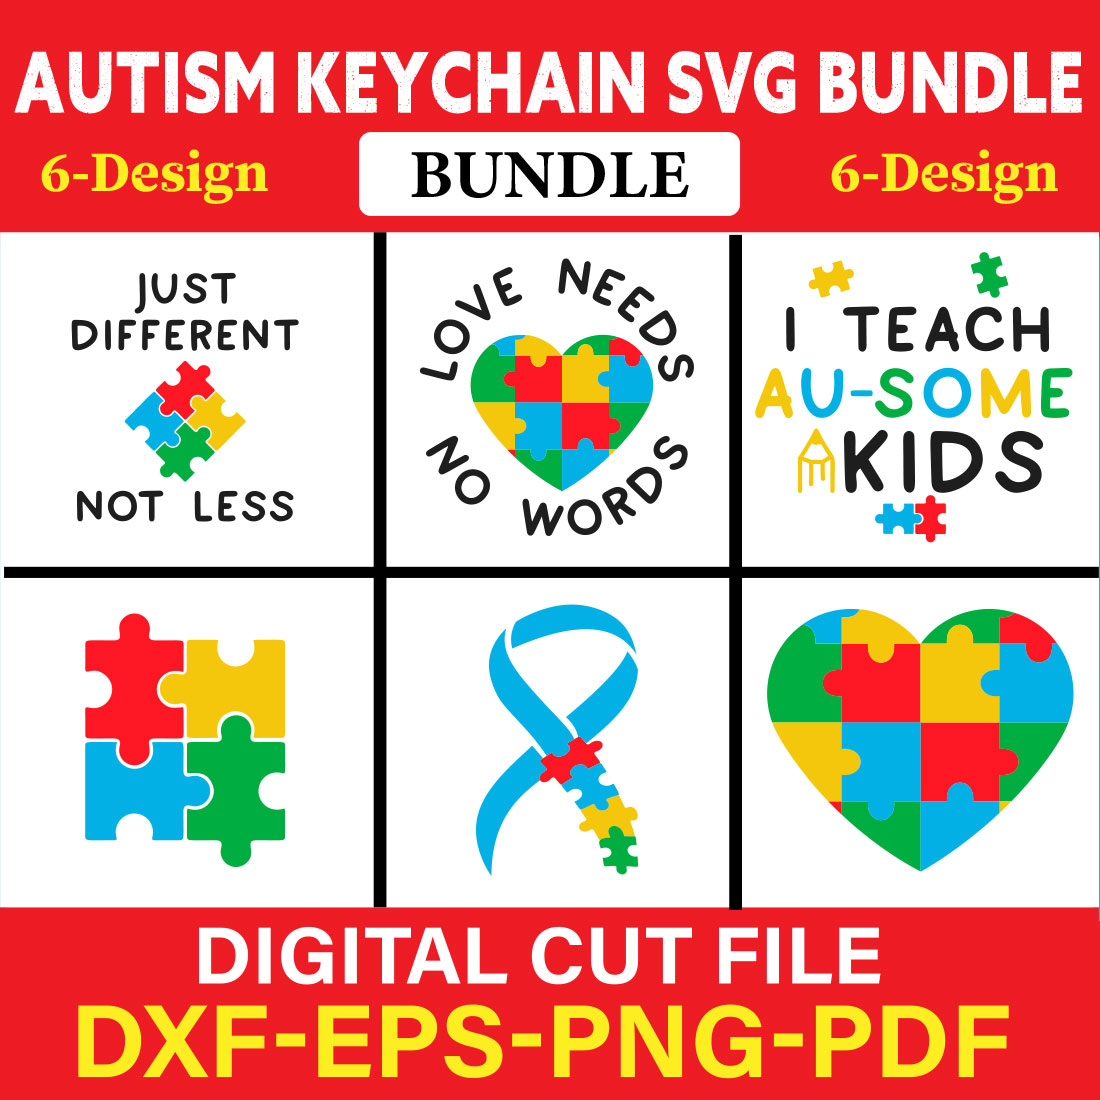 Autism Awareness Keychain T-shirt Design Bundle Vol-1 cover image.